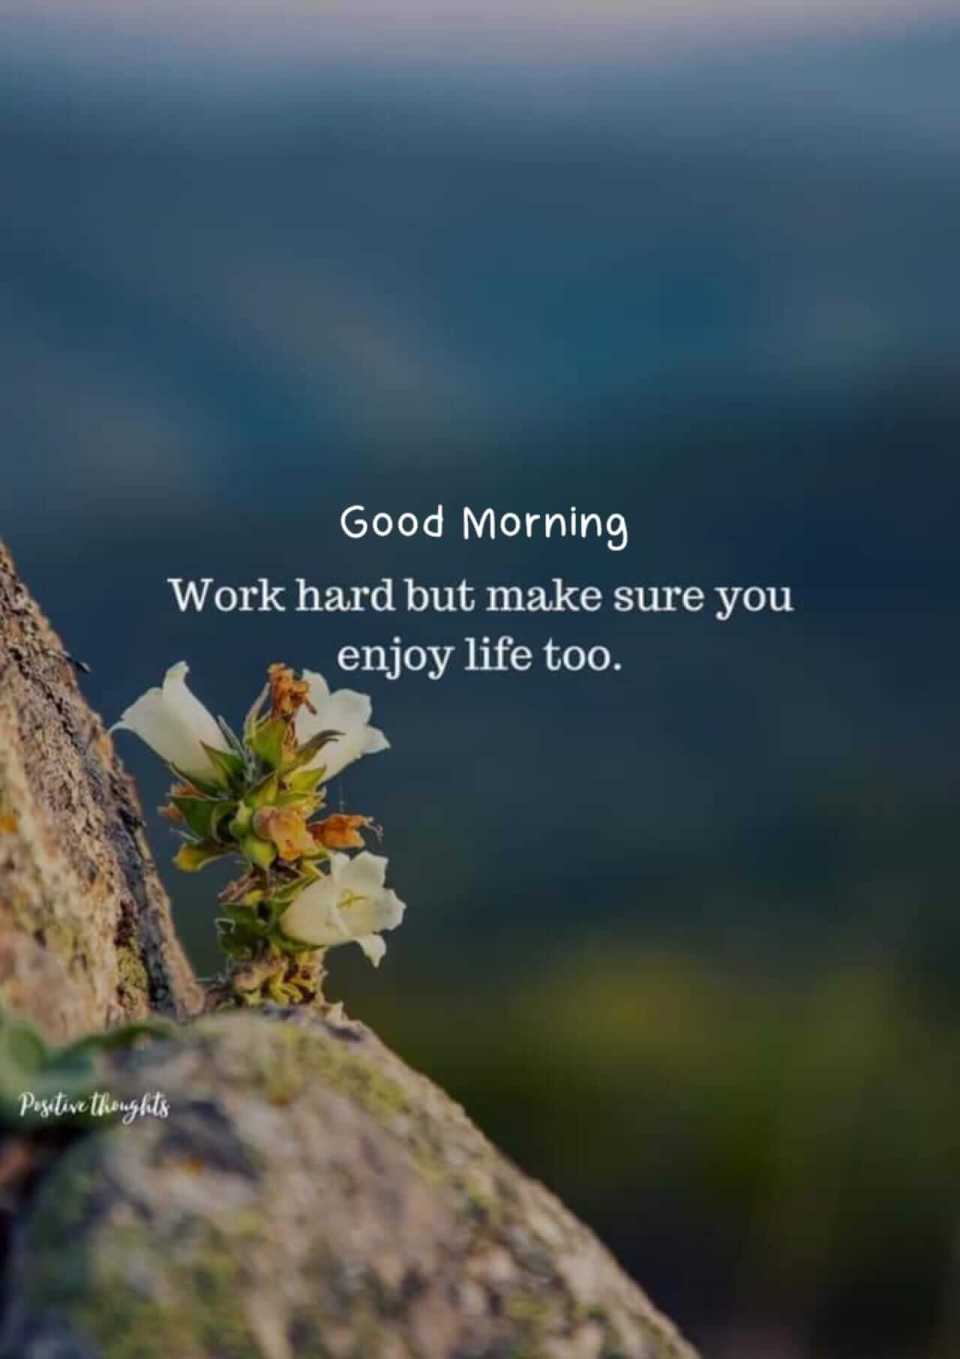 Work hard but make sure you enjoy life too, Good morning best wish